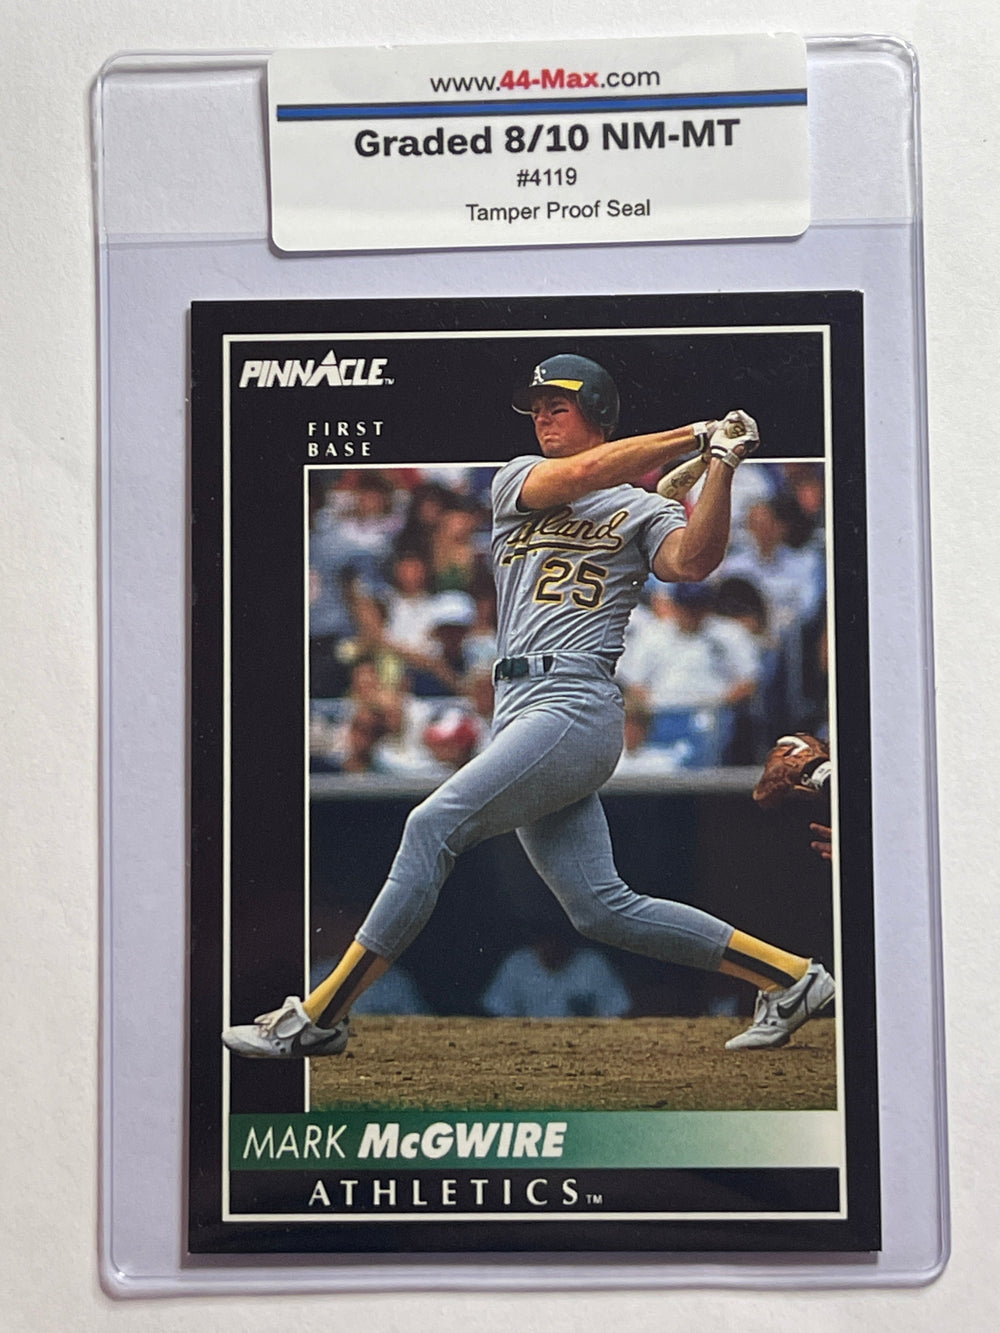 Mark McGwire 1992 Pinnacle Baseball Card. 44-Max 8/10 Mint #4119